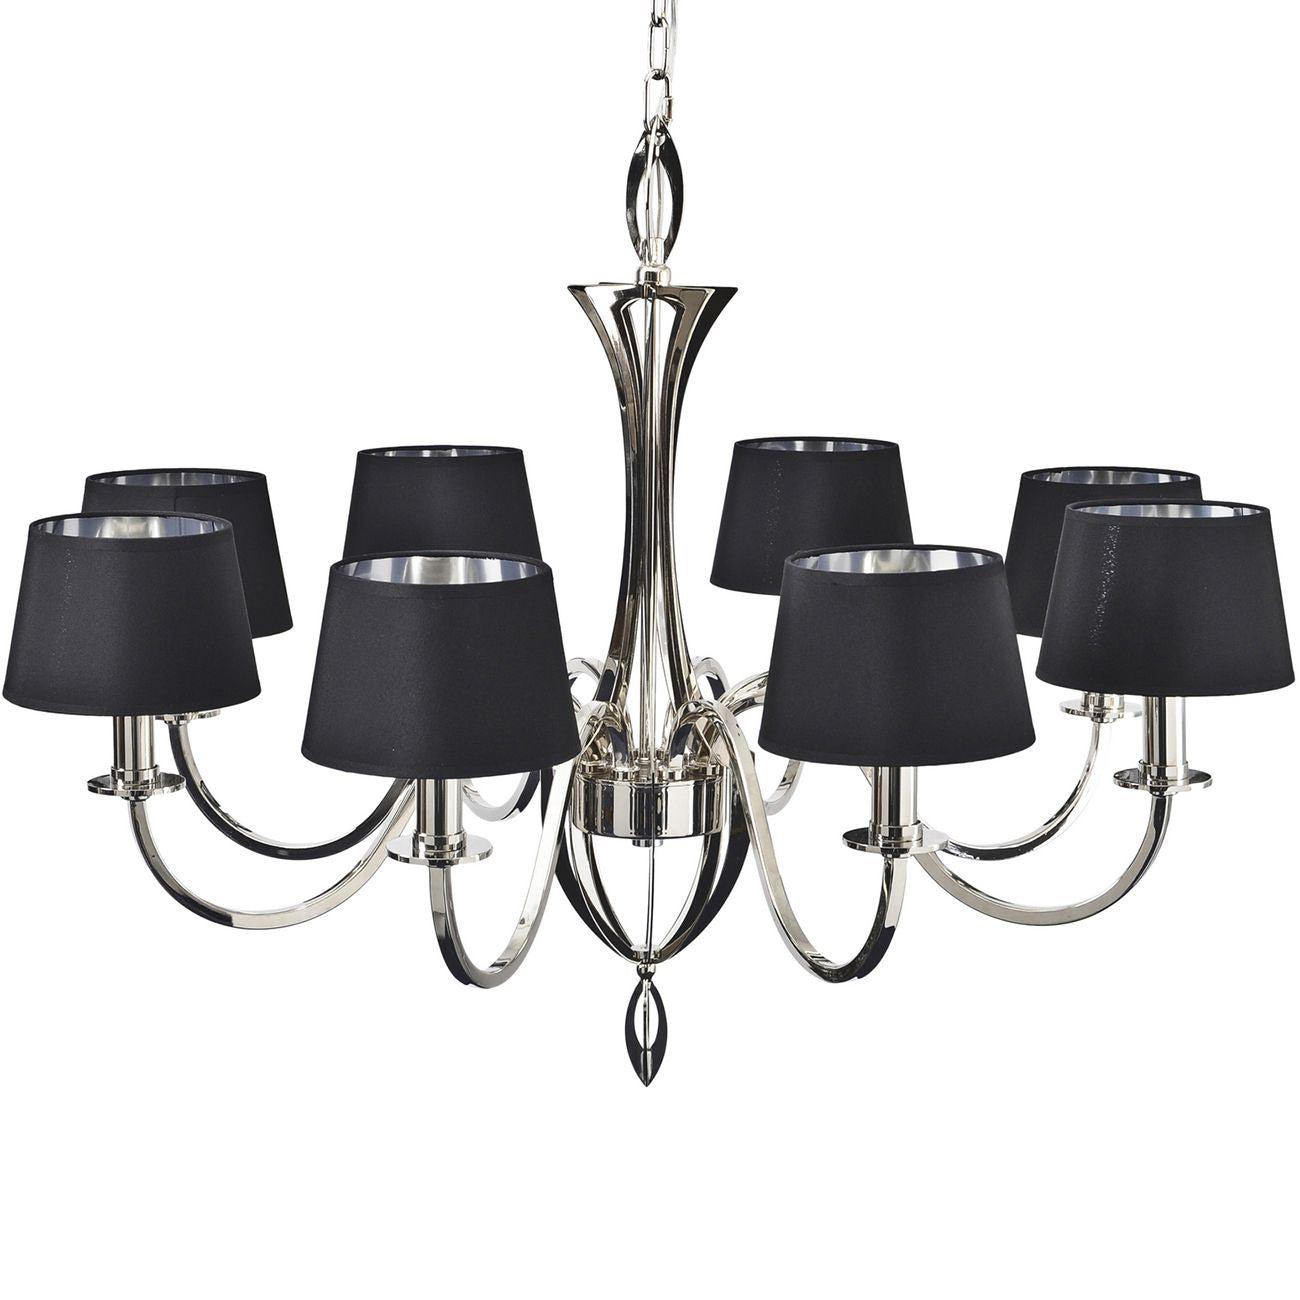 Blakemore Multi Chandelier Pendant Light 8 Lamp Hanging Black Ceiling Fixture 97cm E14 40W-VENTI 97cm-Distinct Designs (London) Ltd